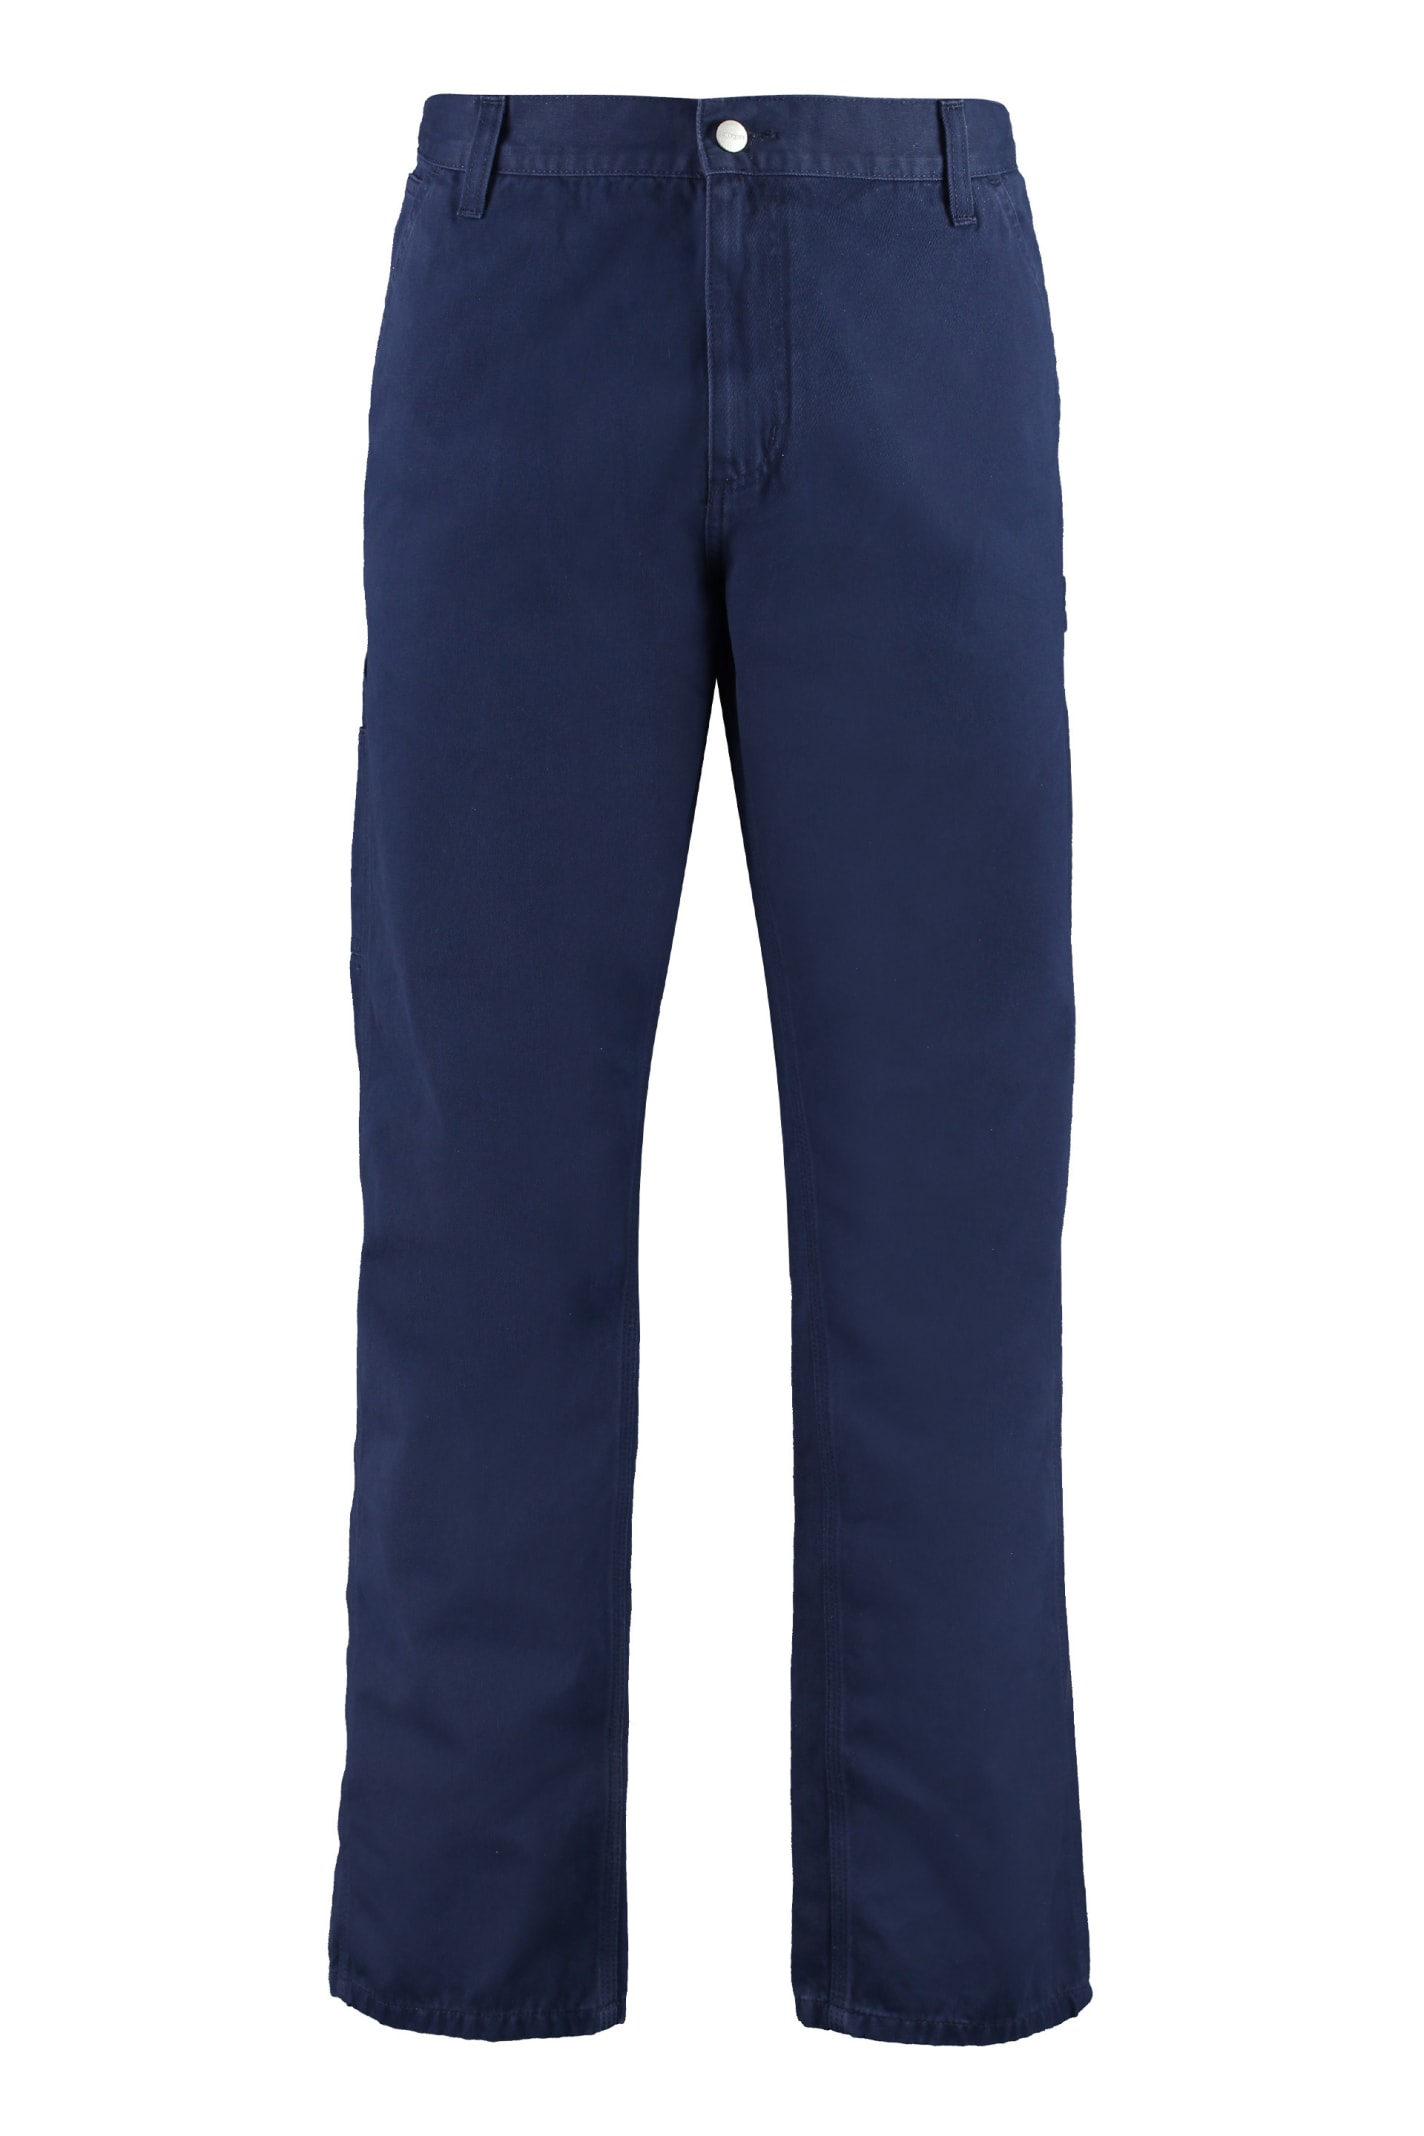 Carhartt Ruck Cotton Cargo-trousers